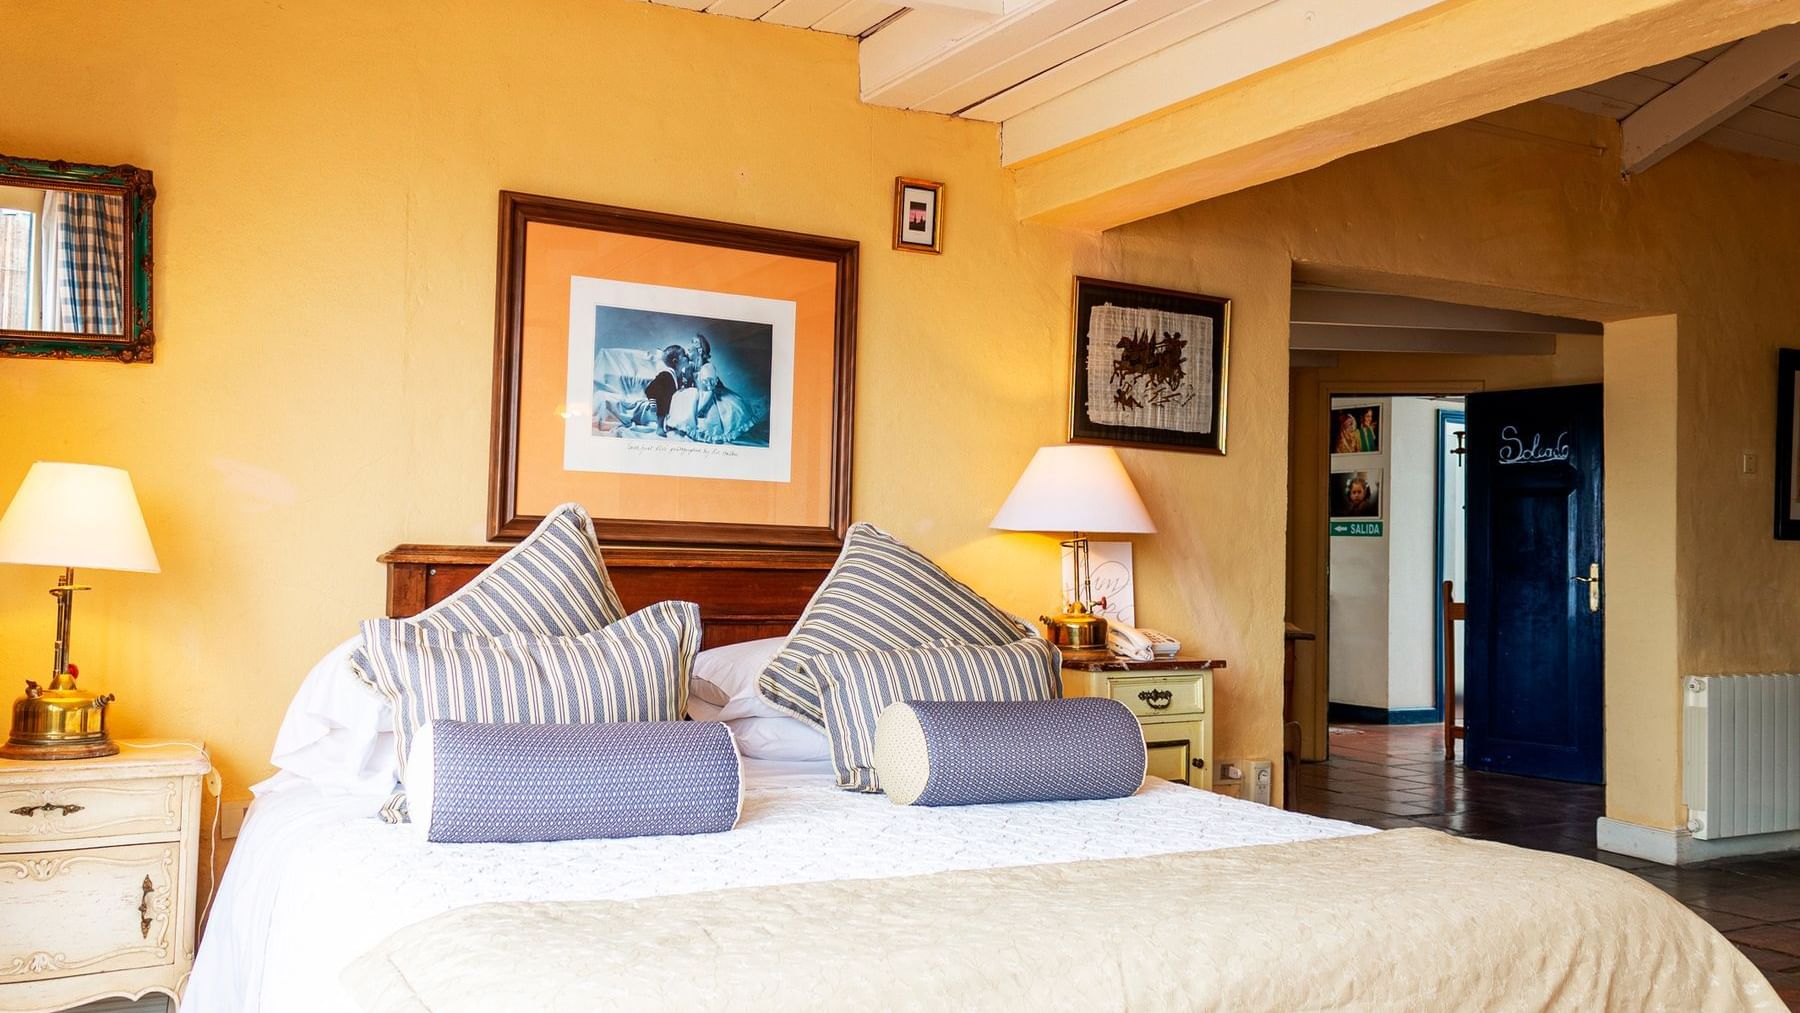 Bedroom arrangement in Standard deck room at DOT hotels 